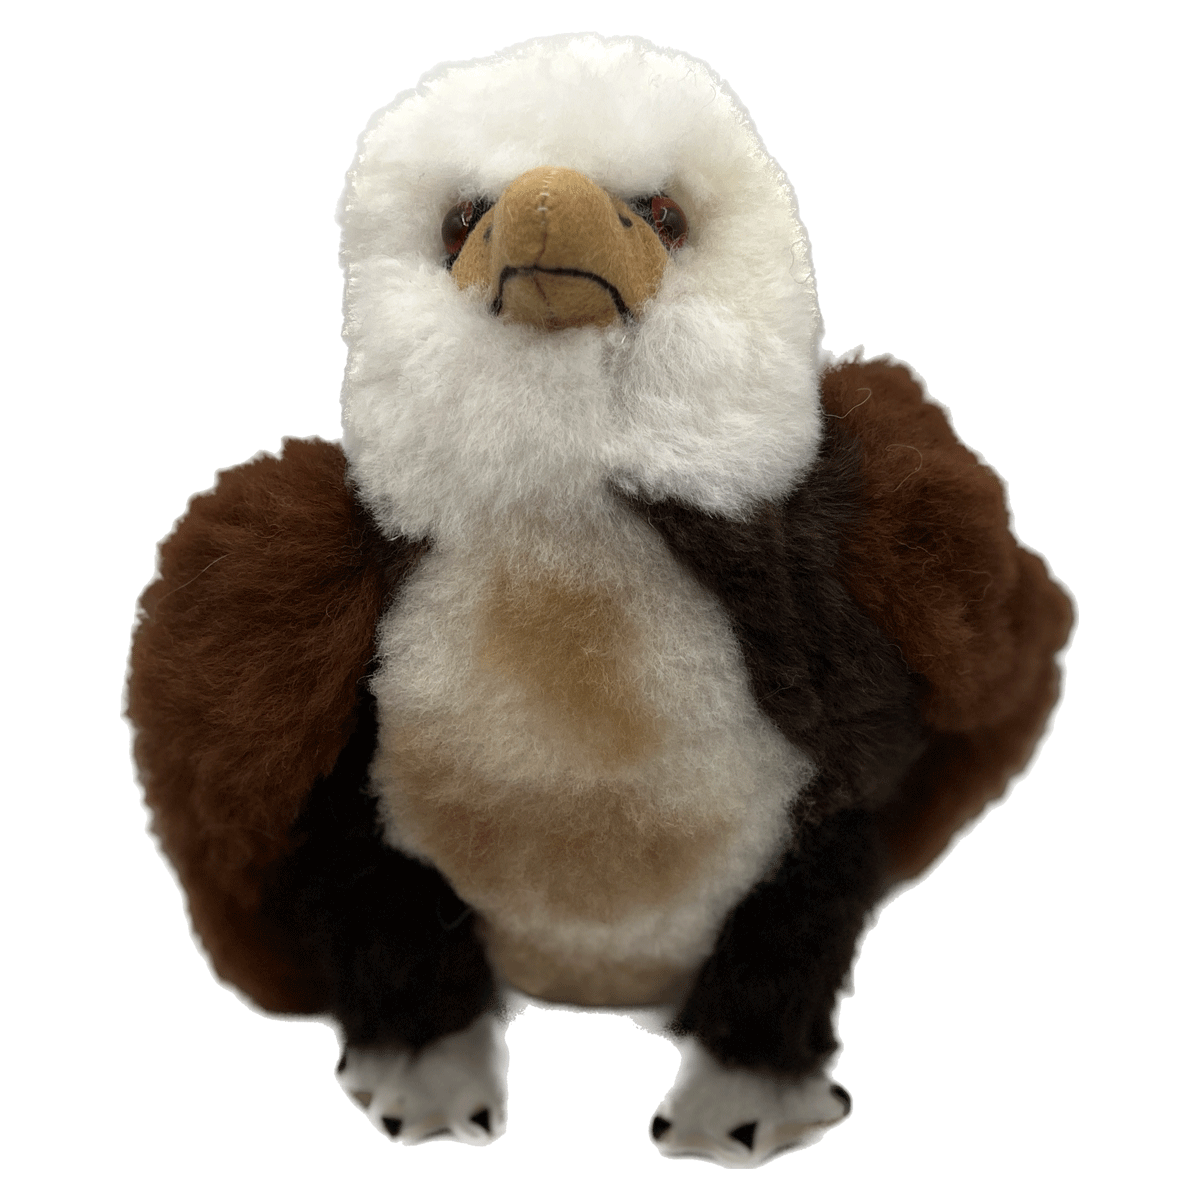 Made to Order Fleece Plush Stuffed Bald Eagle/american Eagle 